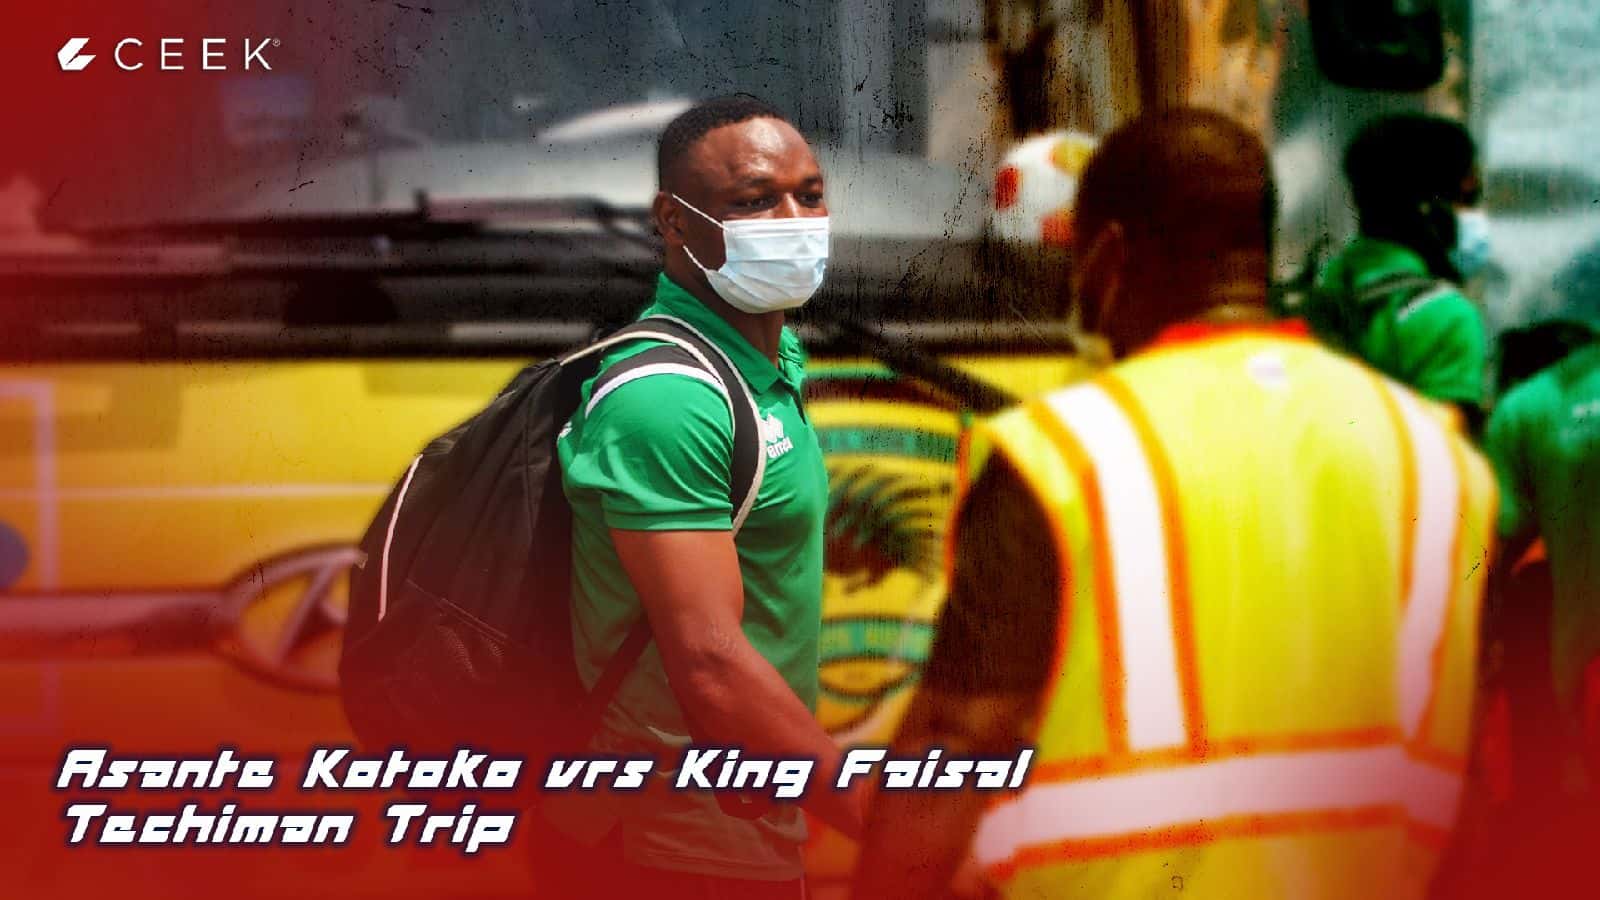 Asante Kotoko vrs King Faisal - Techiman Trip